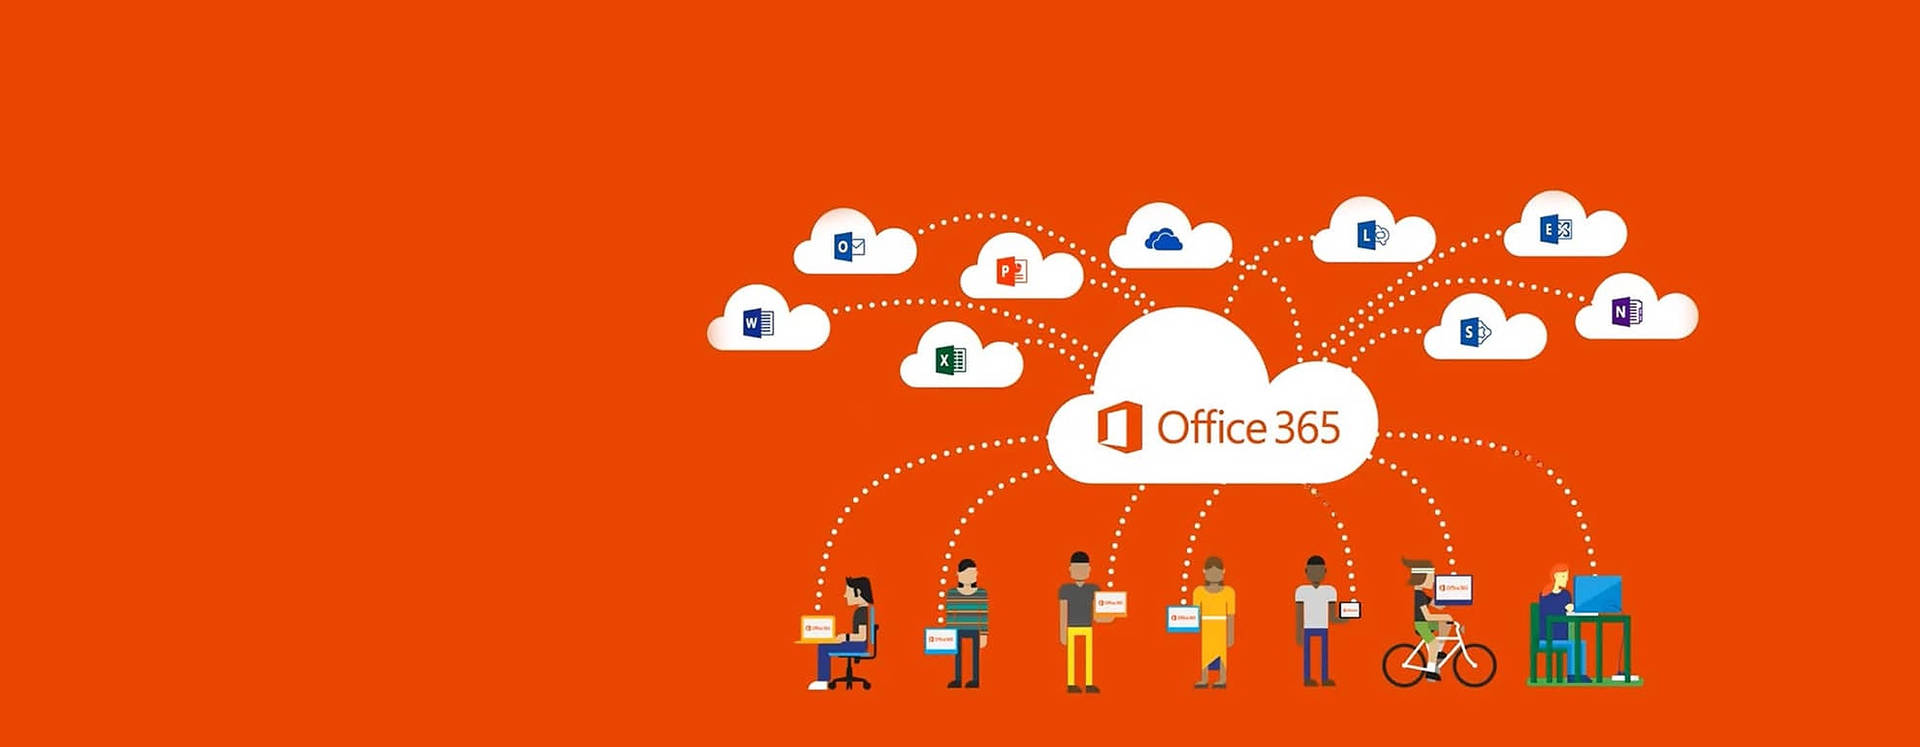 Office 365 Cloud Server Background